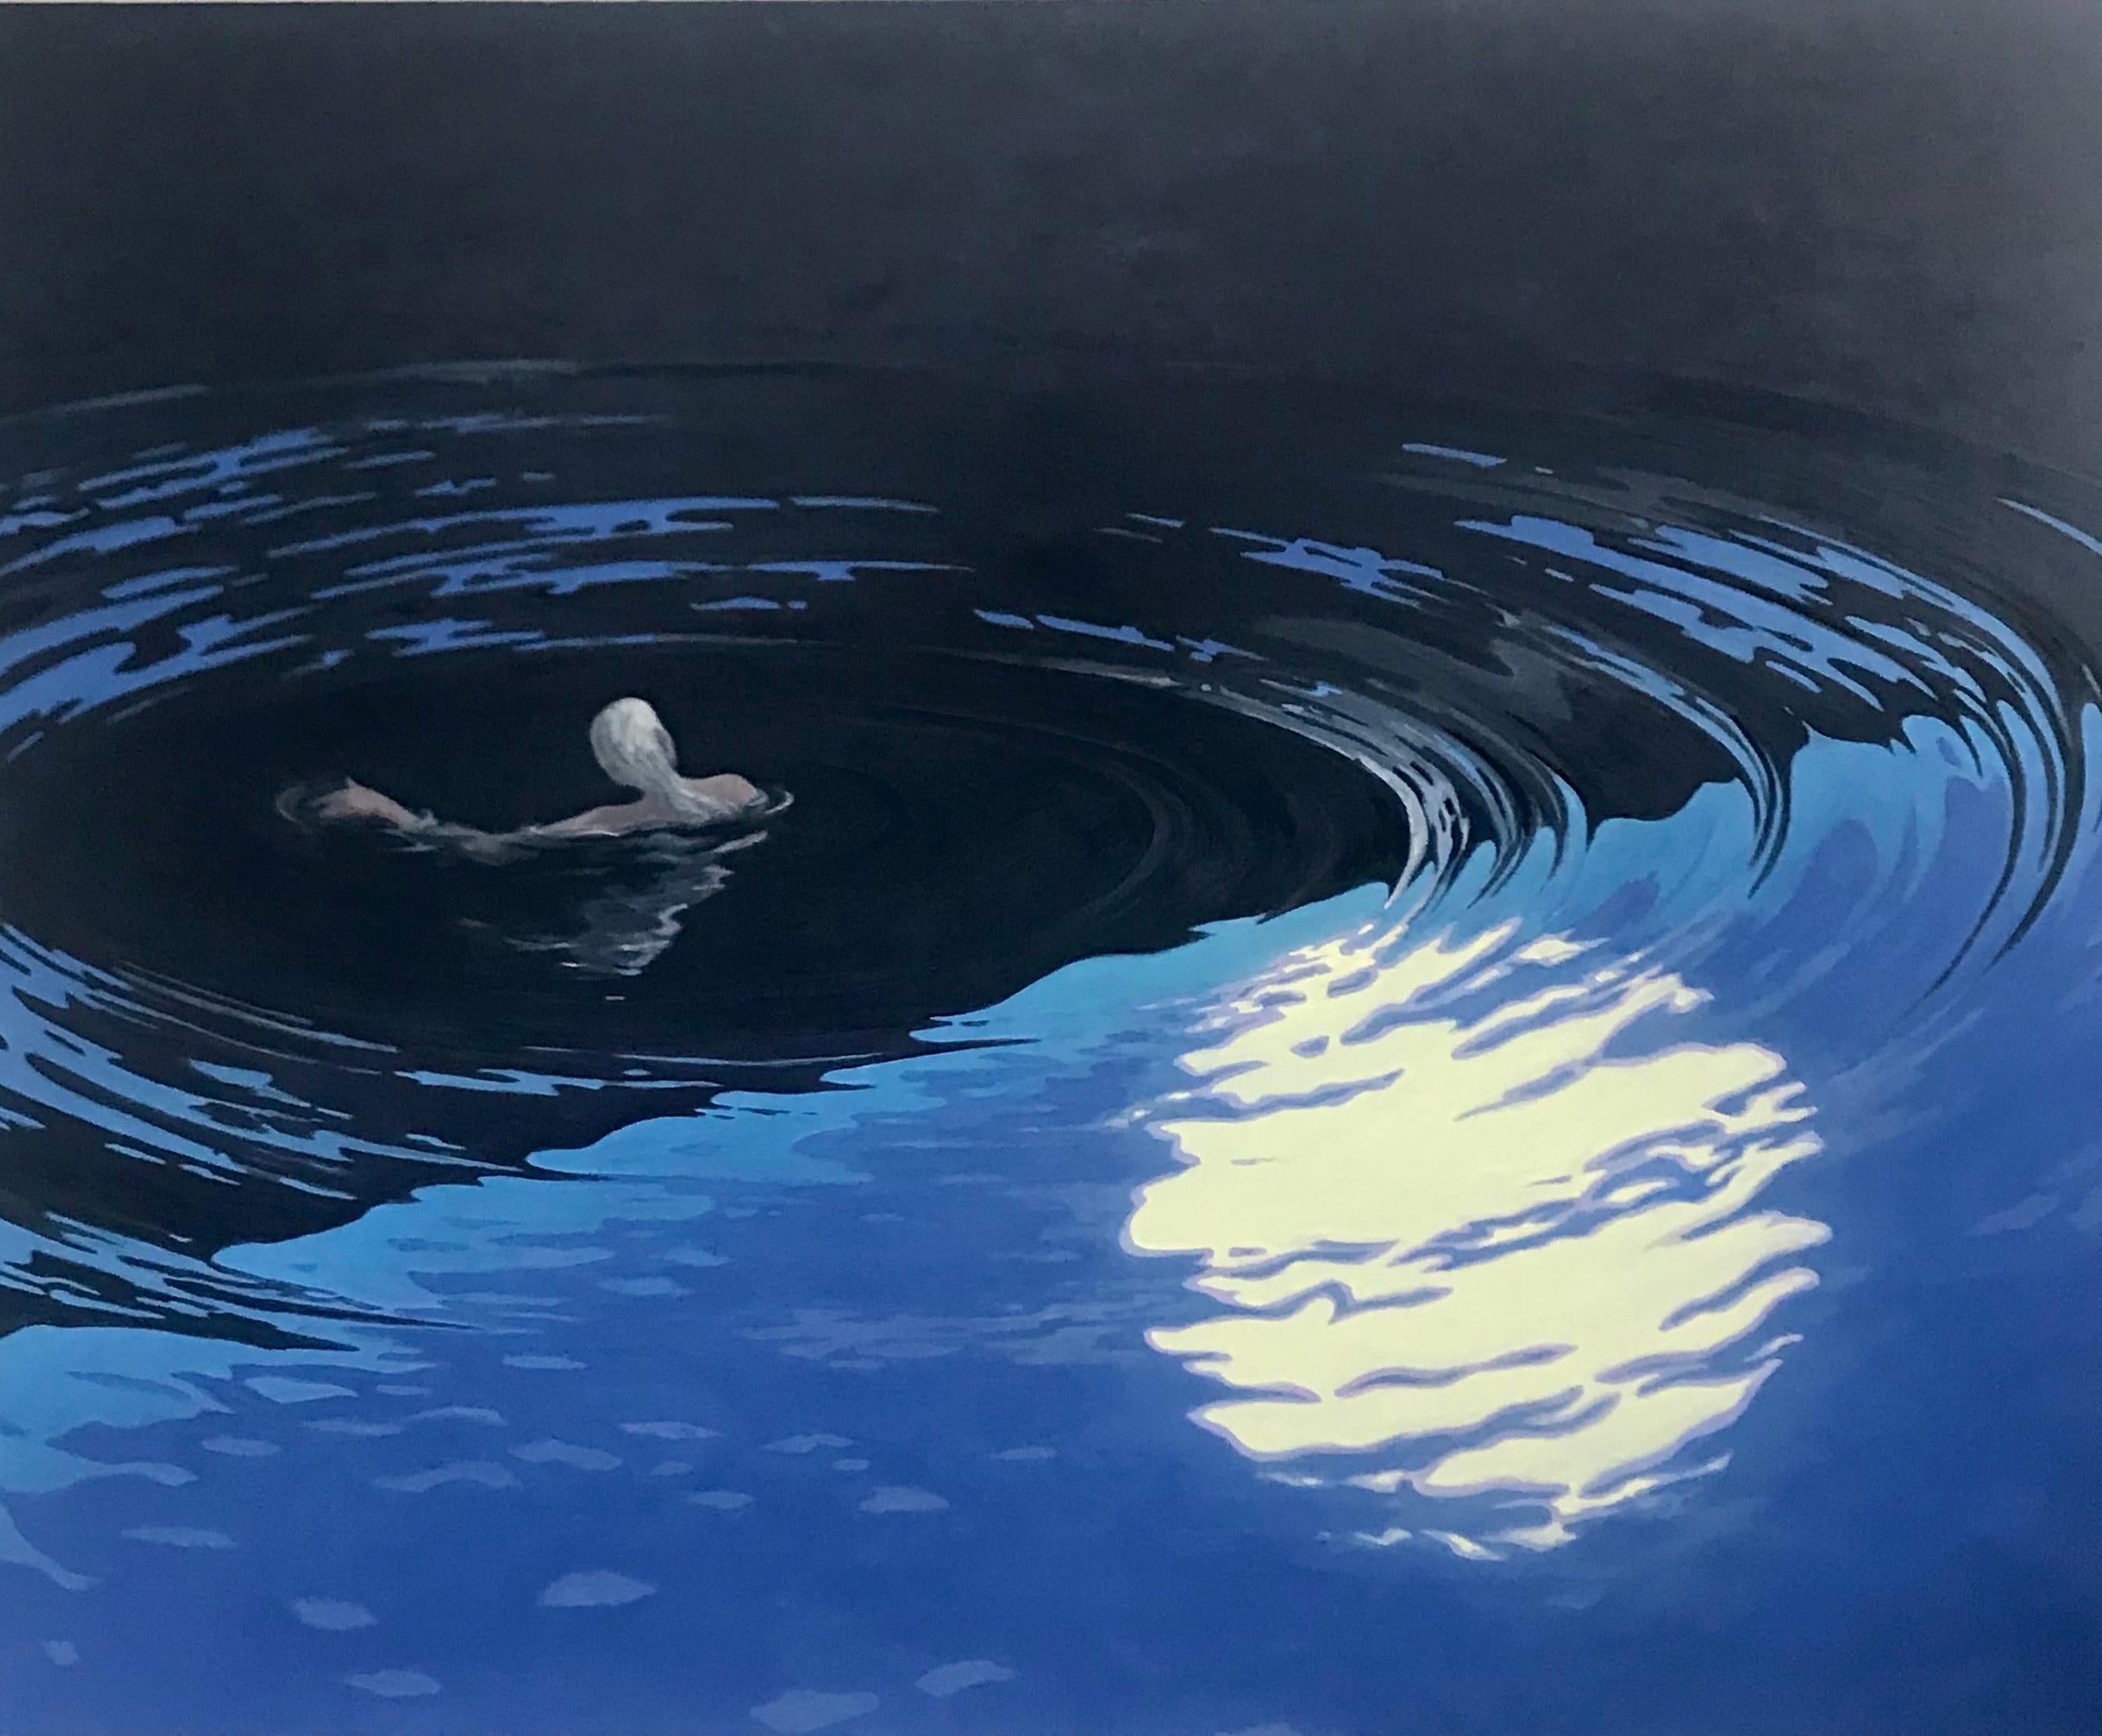 KK Kozik Figurative Painting - Floating, Night Landscape, Figure Swimming in Blue Water, Moonlight